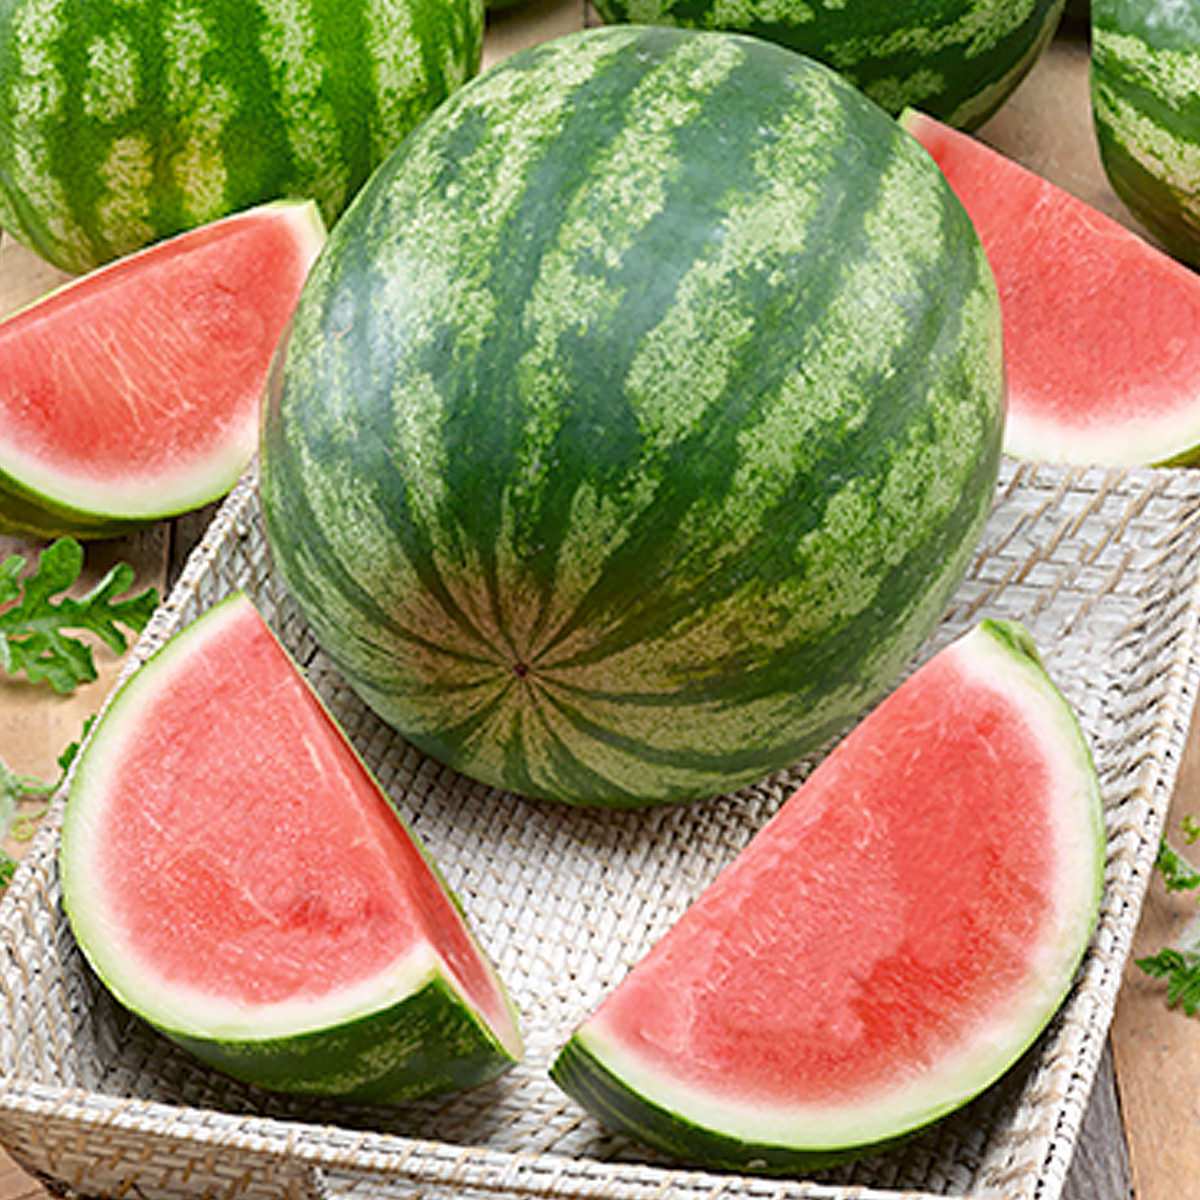 Triple Elite F1 Hybrid Watermelon Seeds